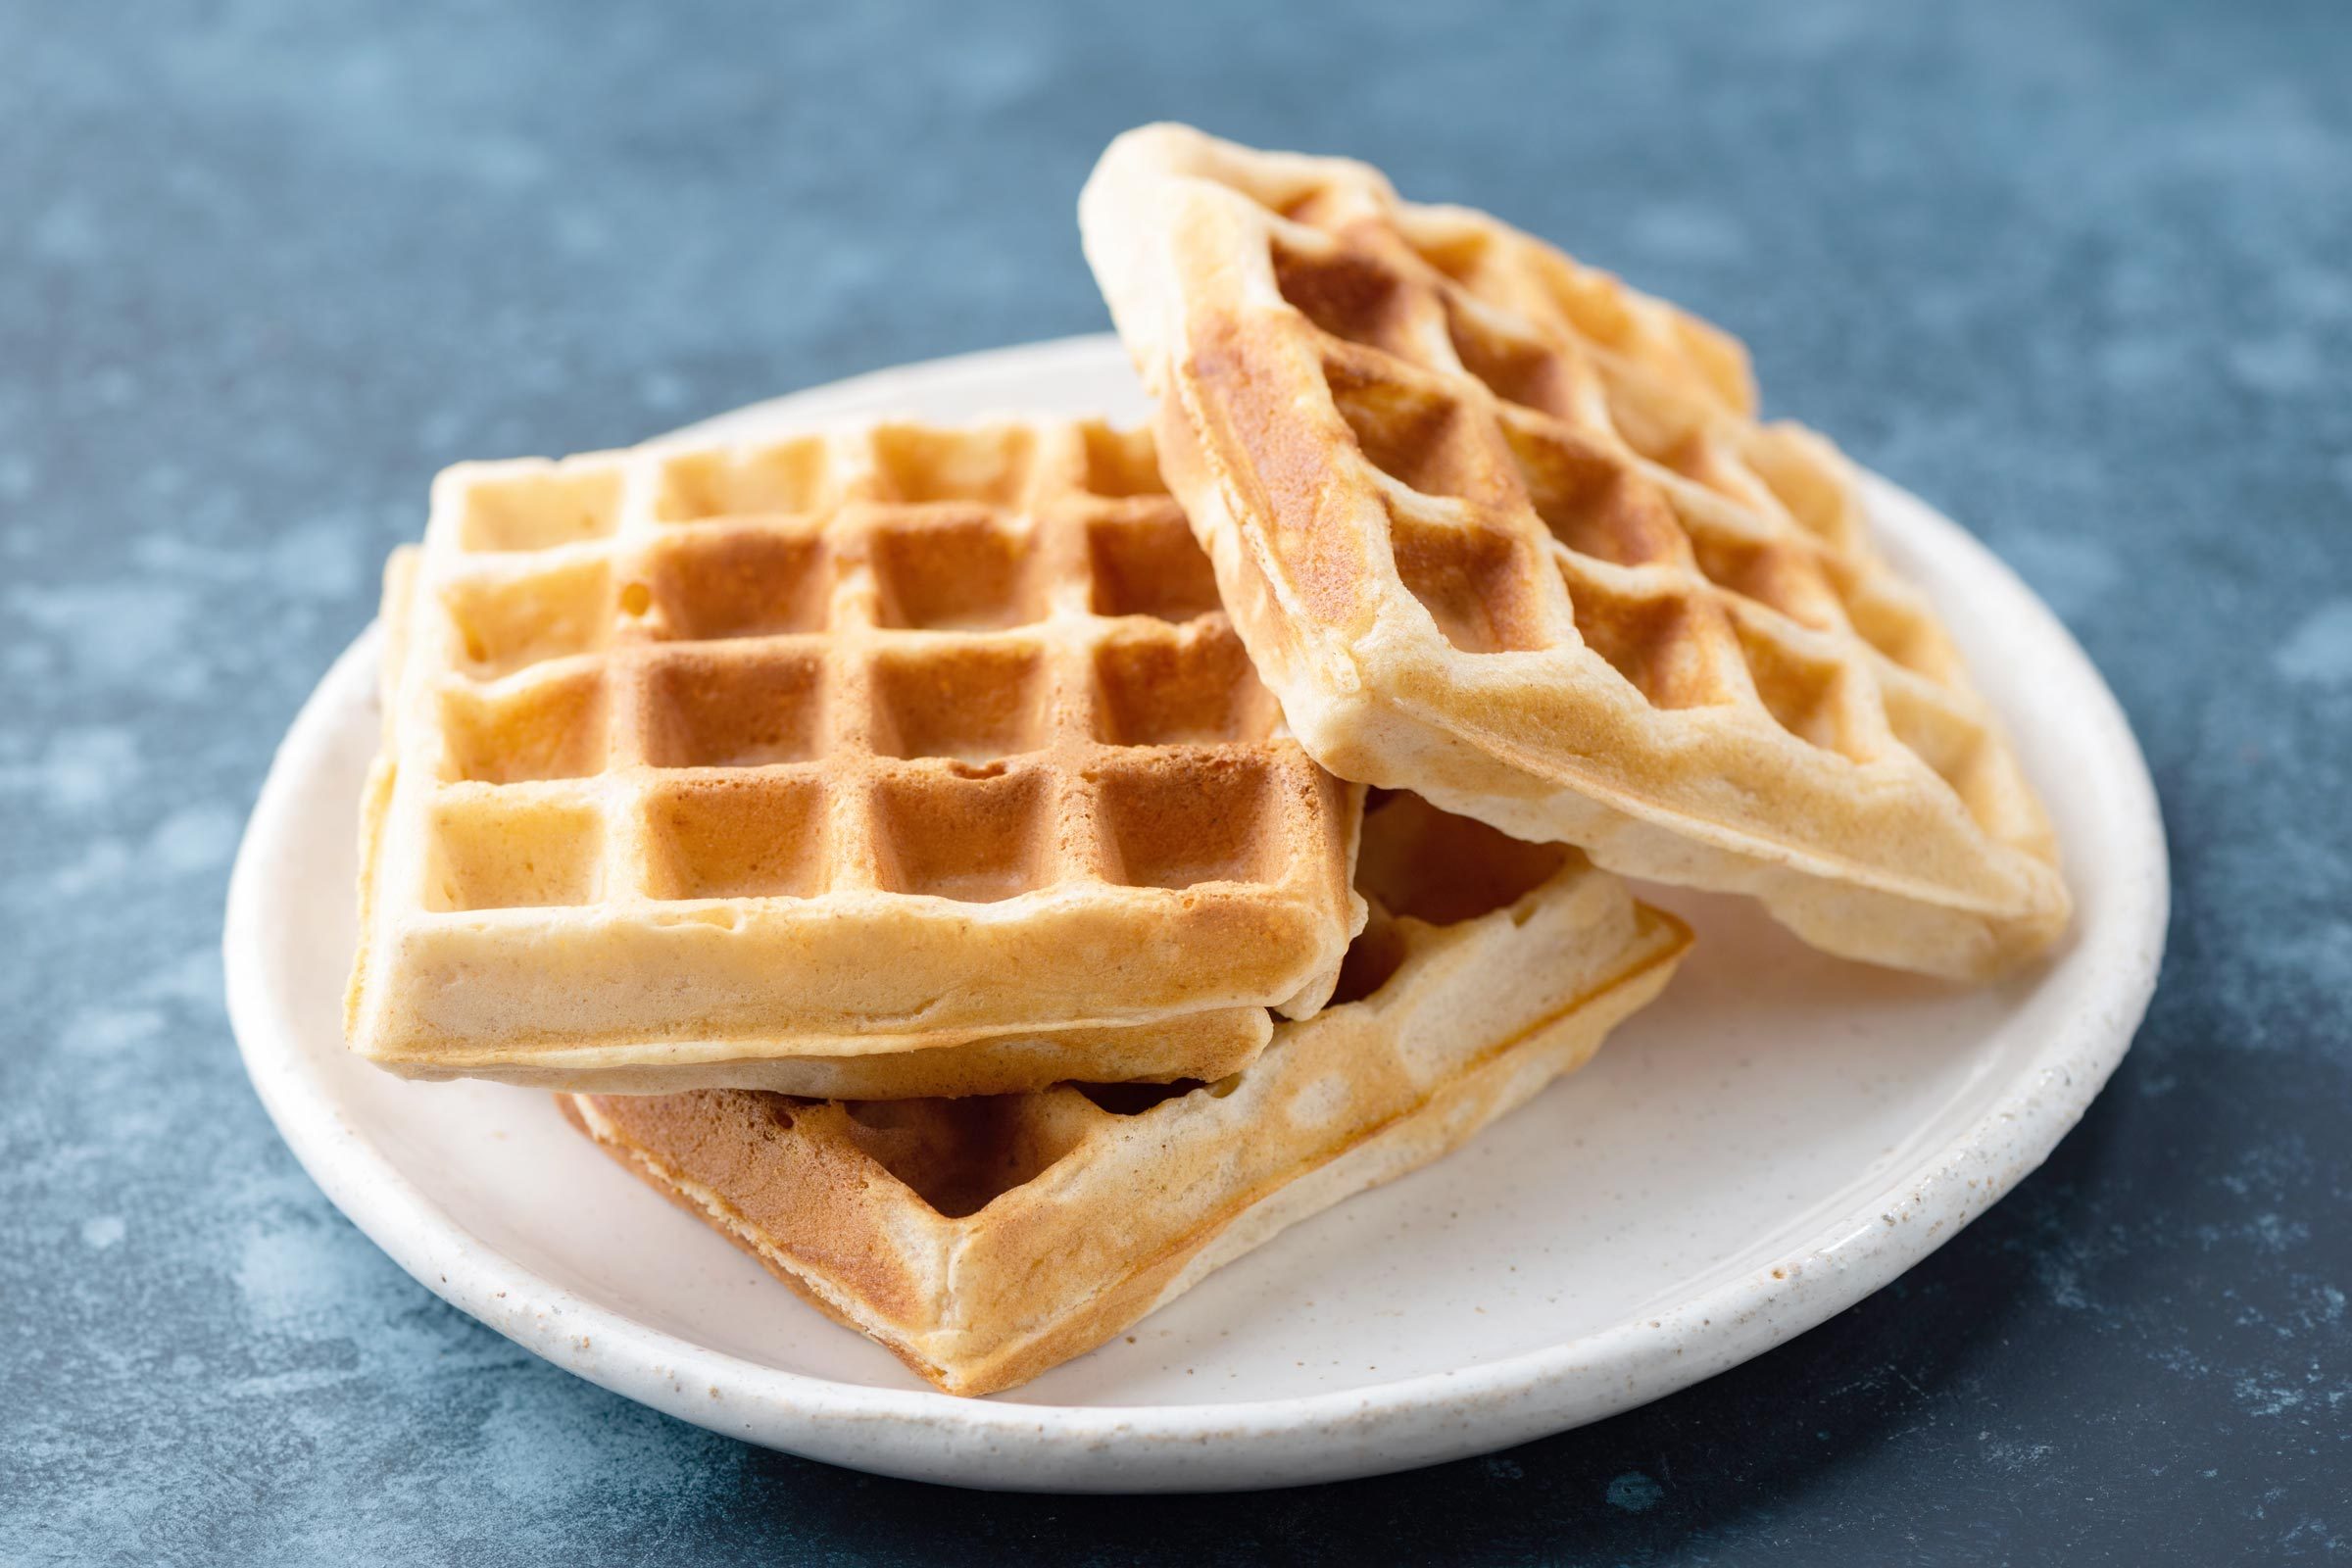 A Popular Brand Just Recalled 168,000 Frozen Breakfast Items in 17 States